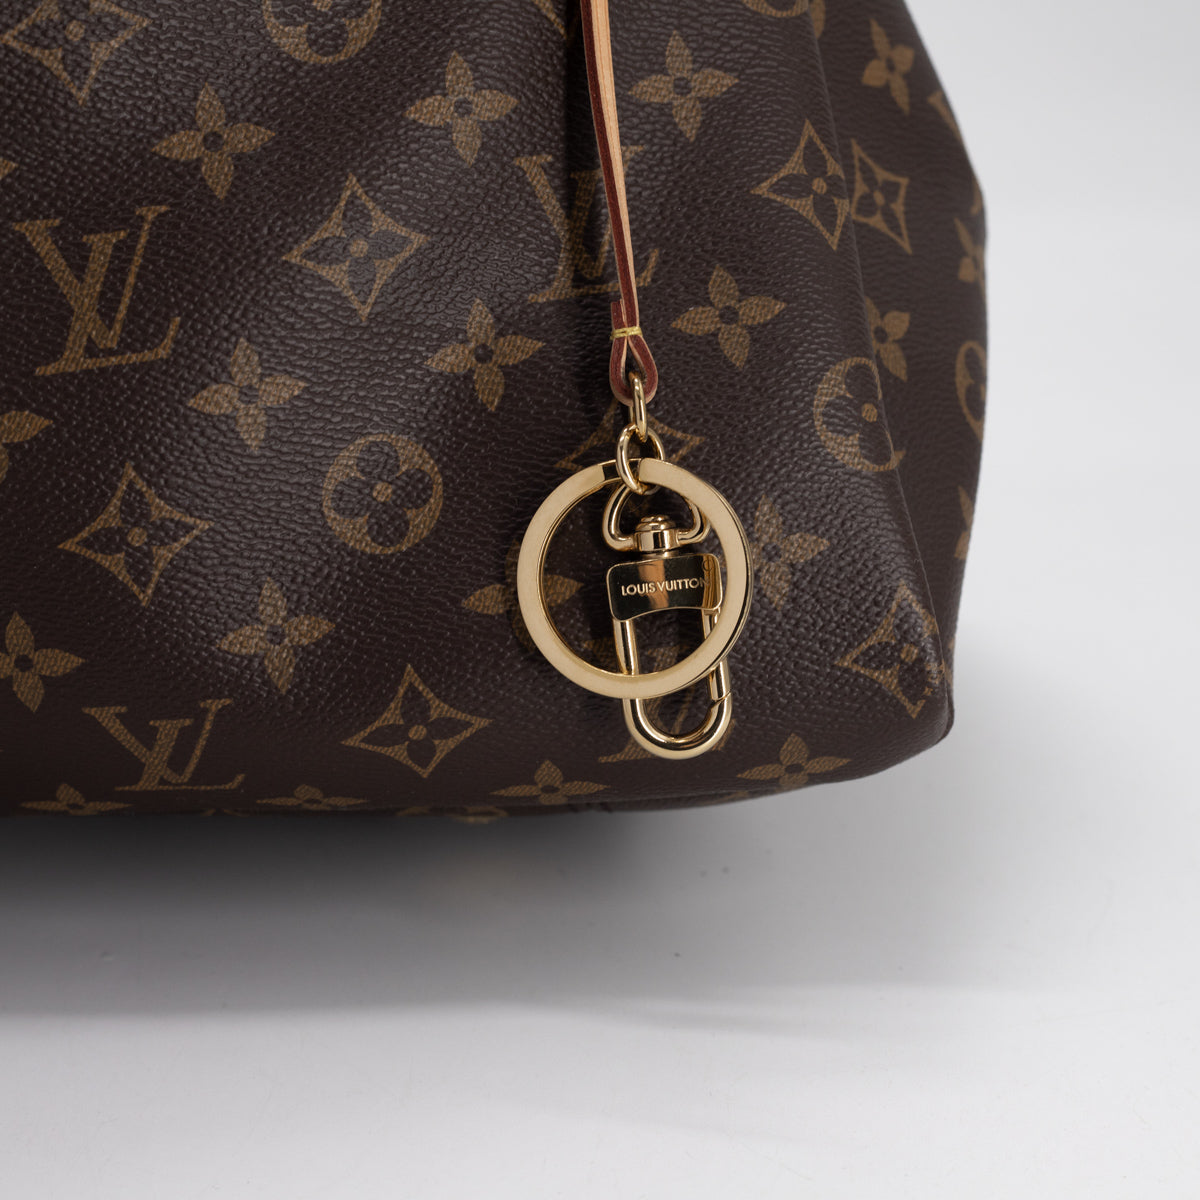 PRELOVED Louis Vuitton Monogram Artsy MM Handbag TX3198 062823 –  KimmieBBags LLC